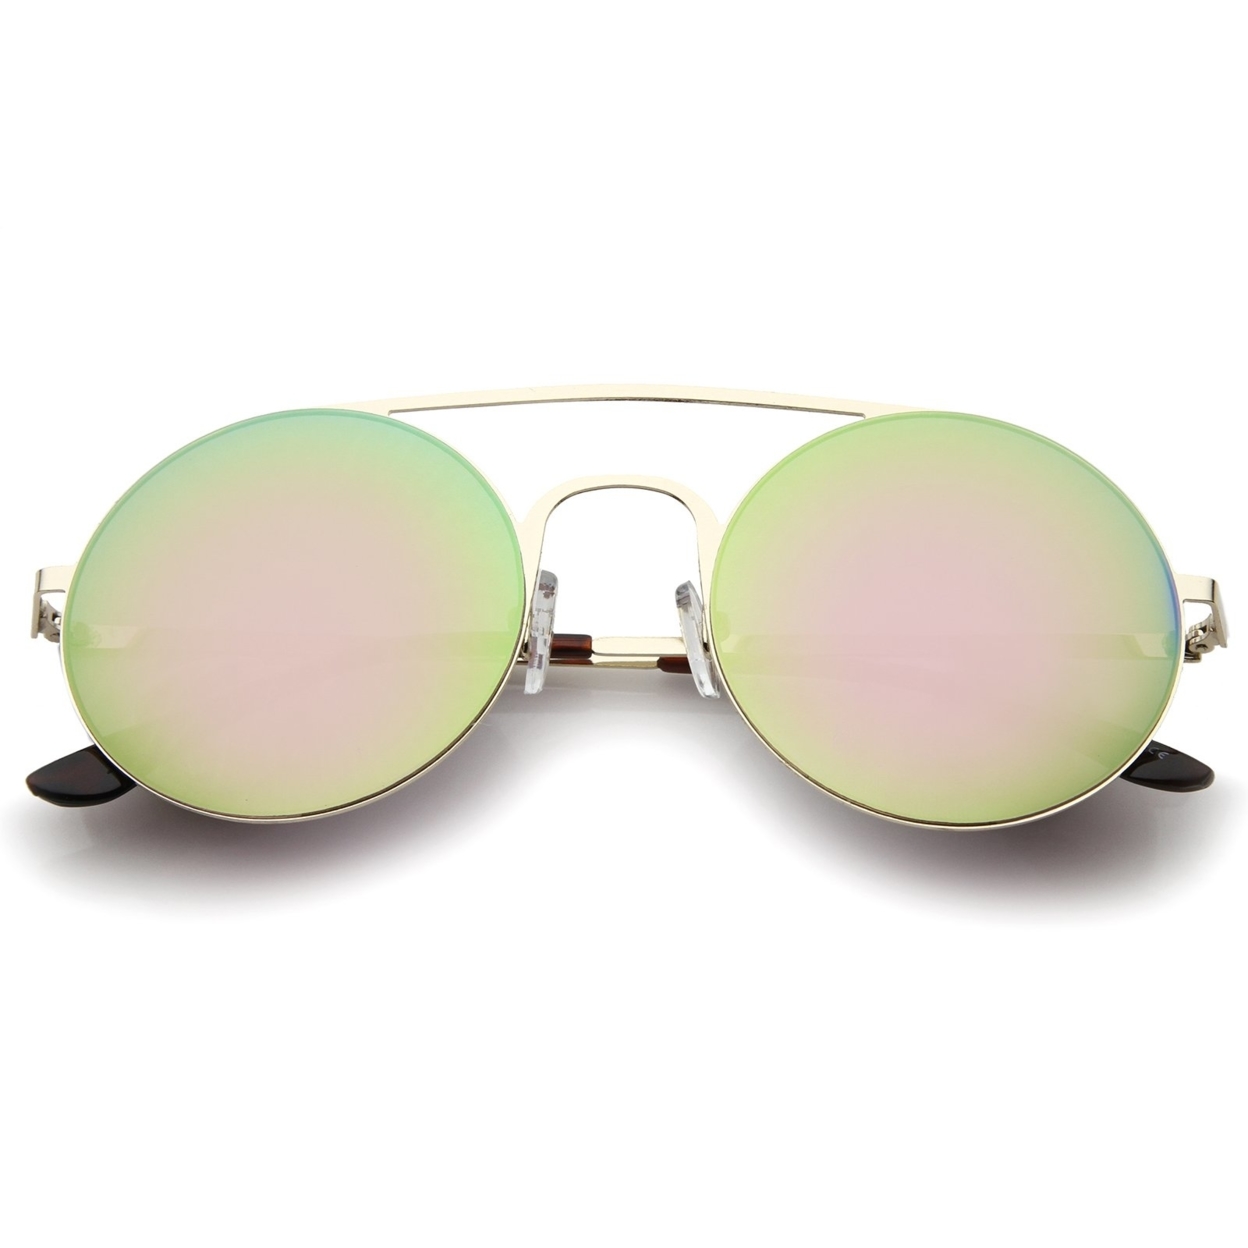 Modern Slim Frame Double Nose Bridge Colored Mirror Flat Lens Round Sunglasses 53mm - Gold / Blue Mirror